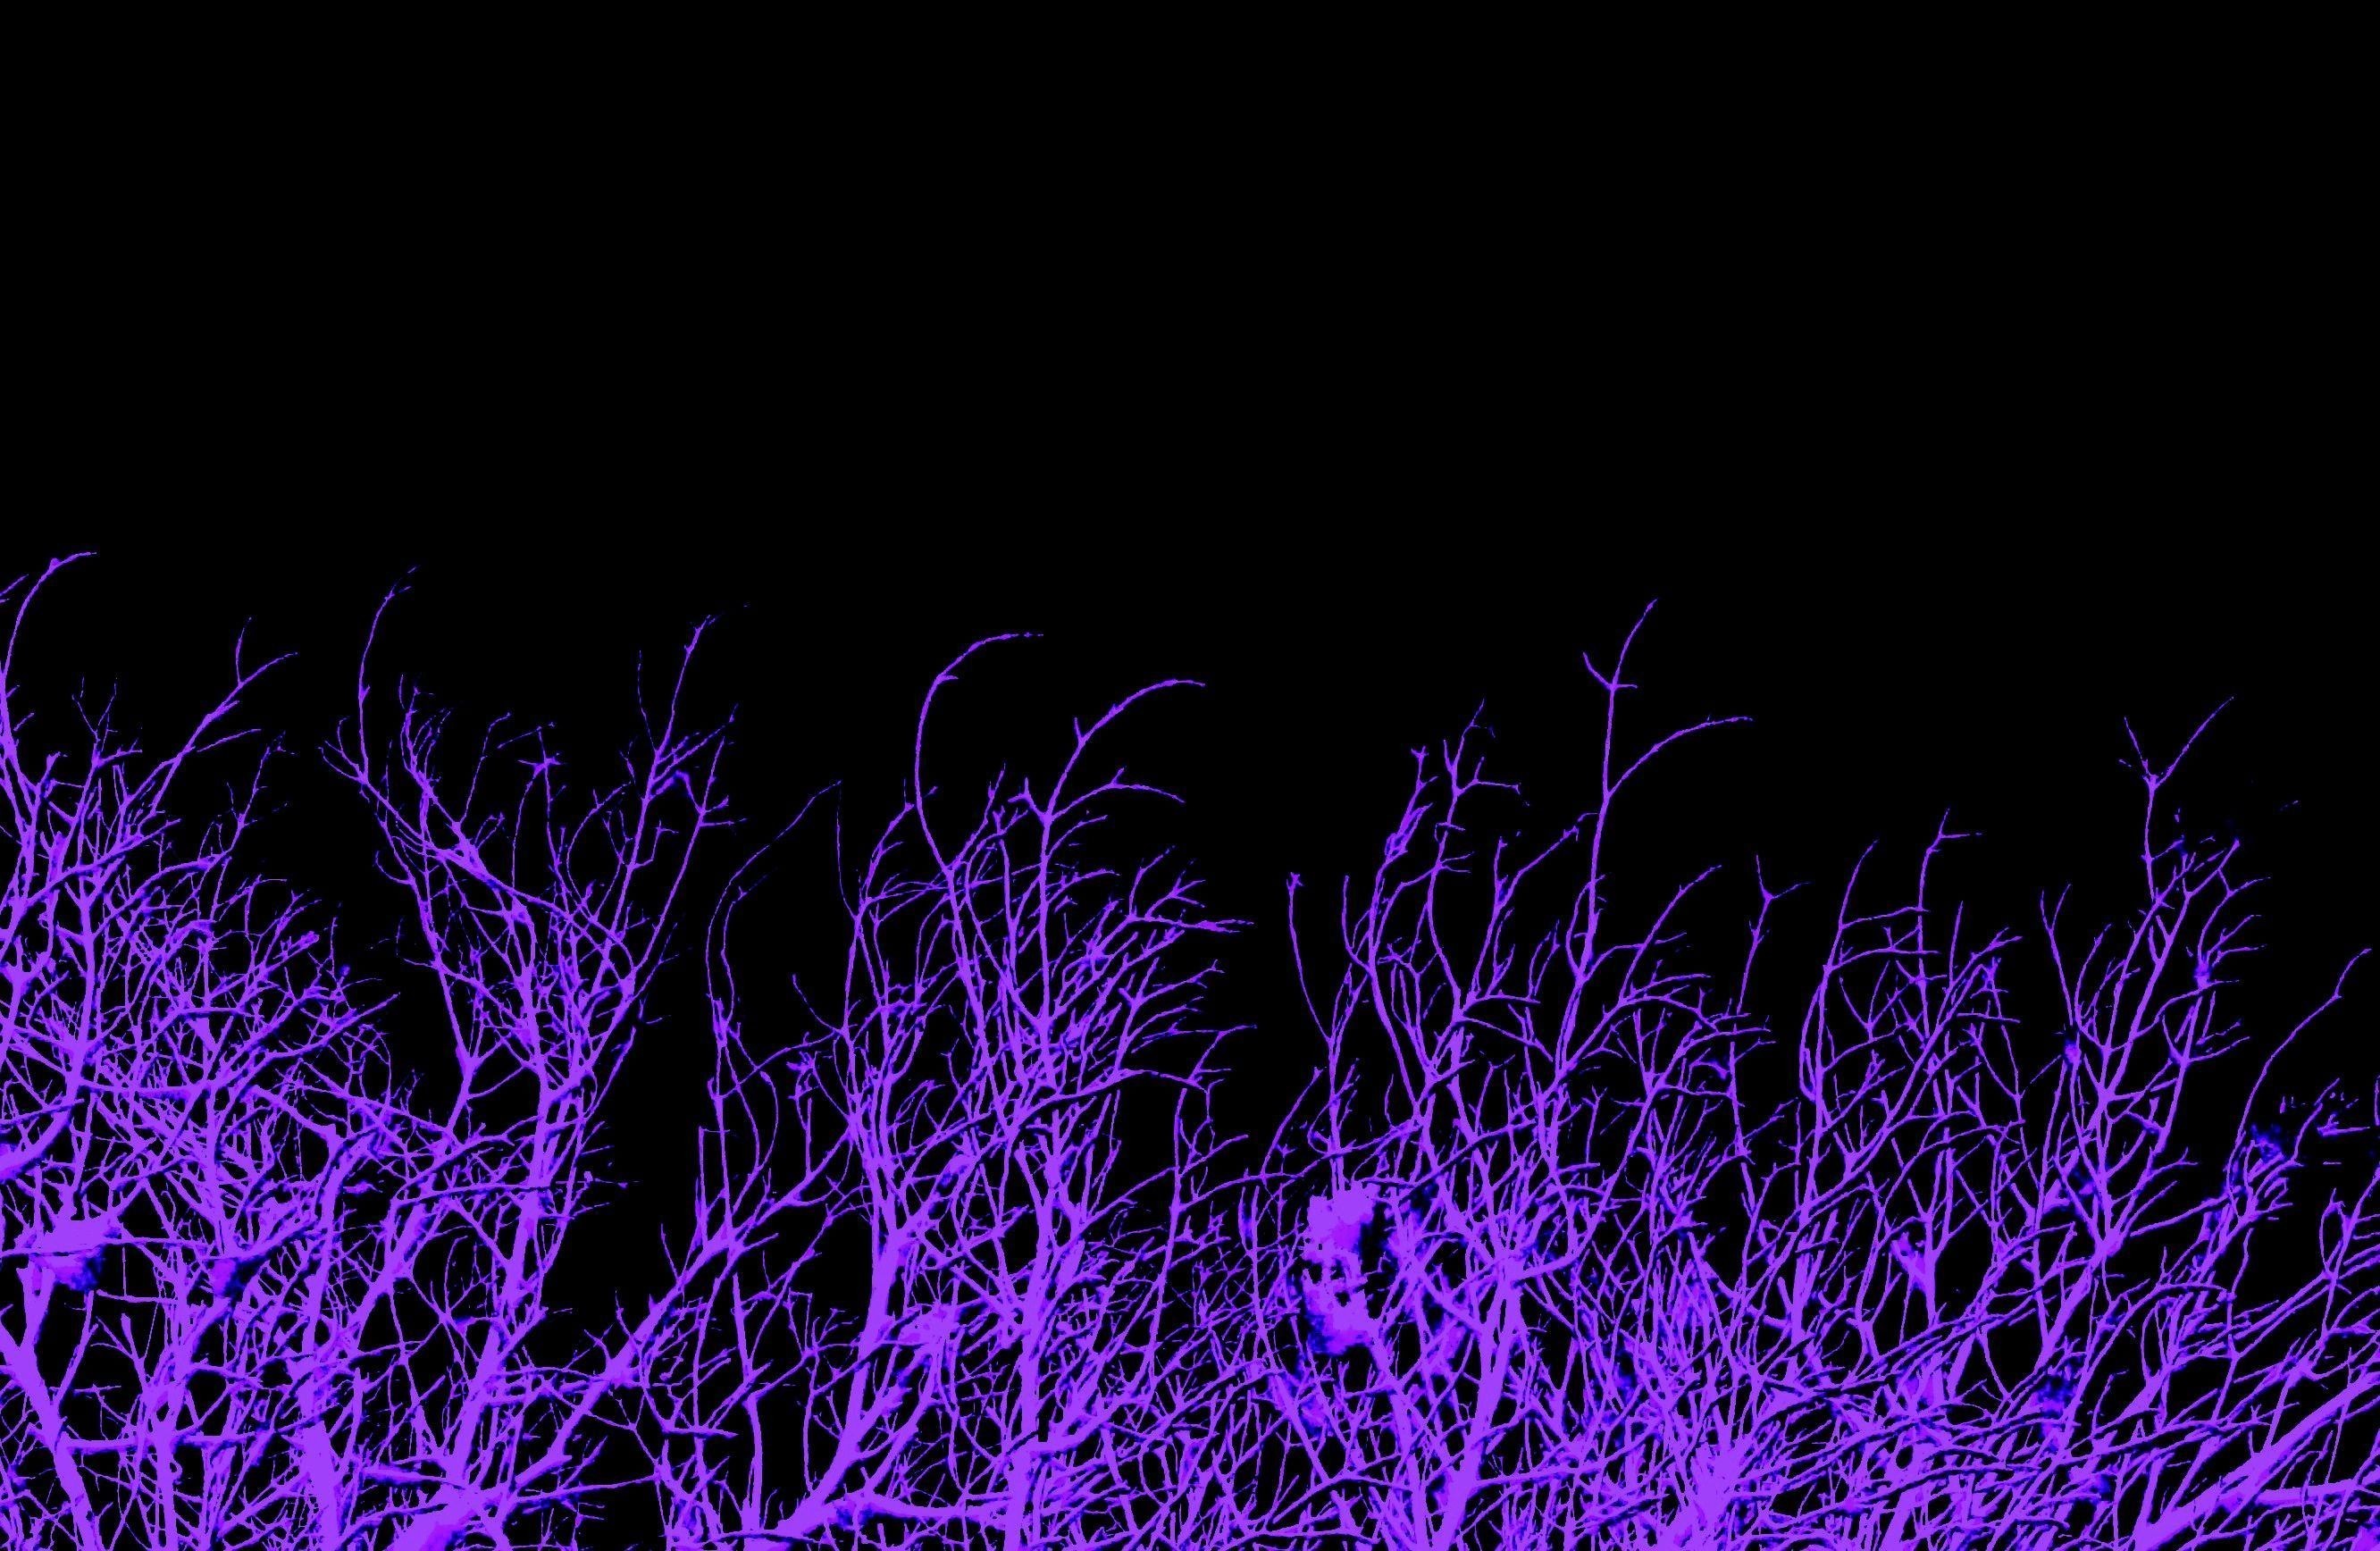 wallpapers tumblr,violet,purple,black,blue,light